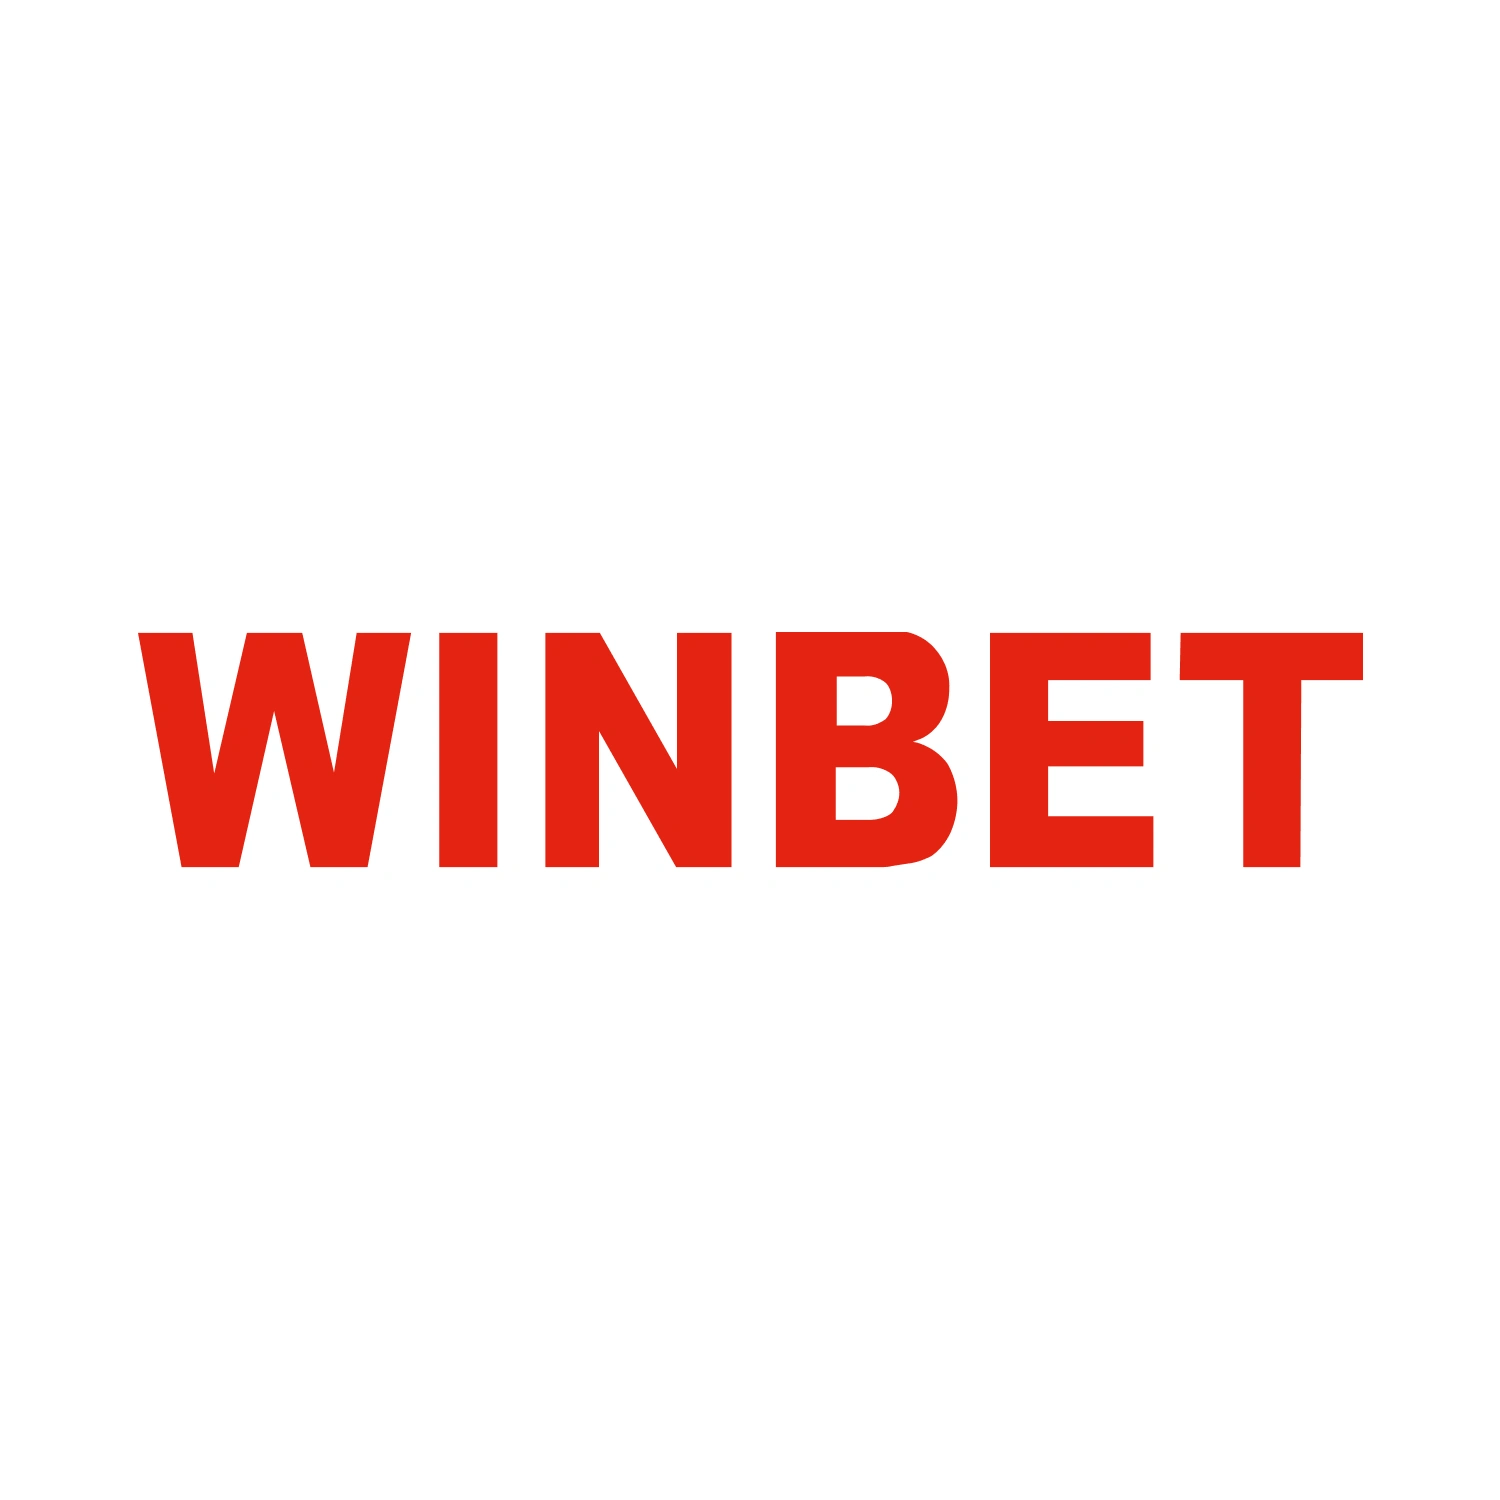 Winbet logo rotund